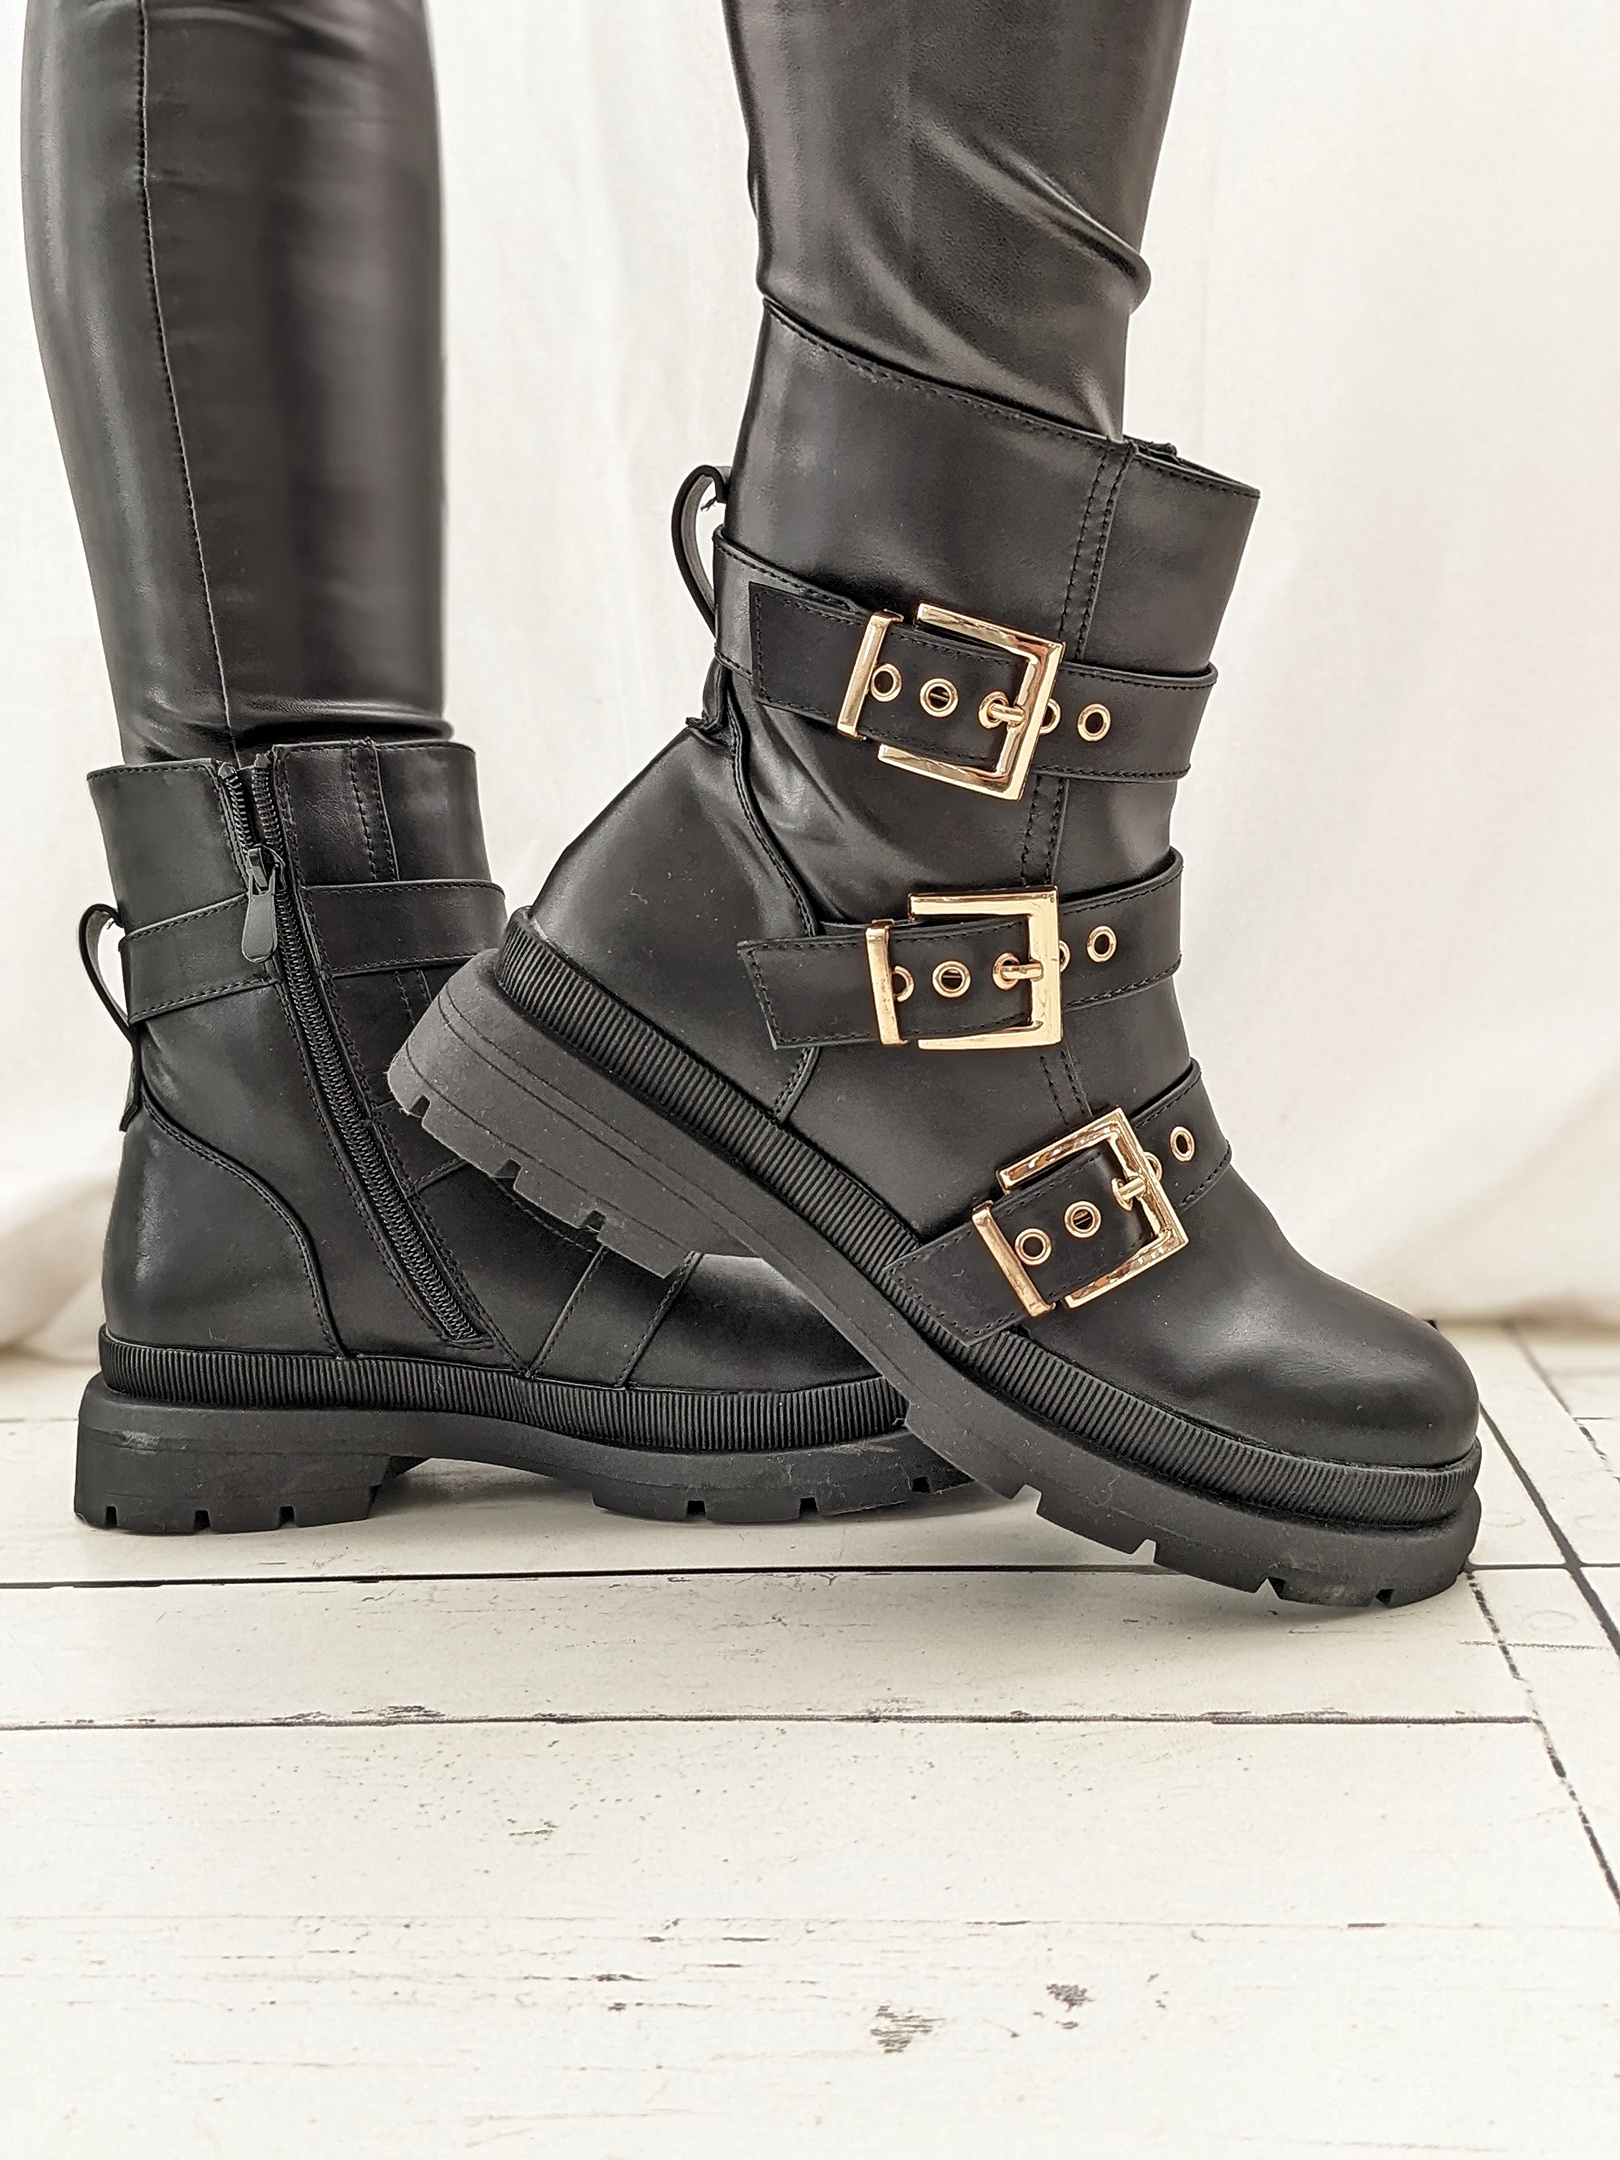 Boots GOLDEN BUCKLE – schwarz SALE